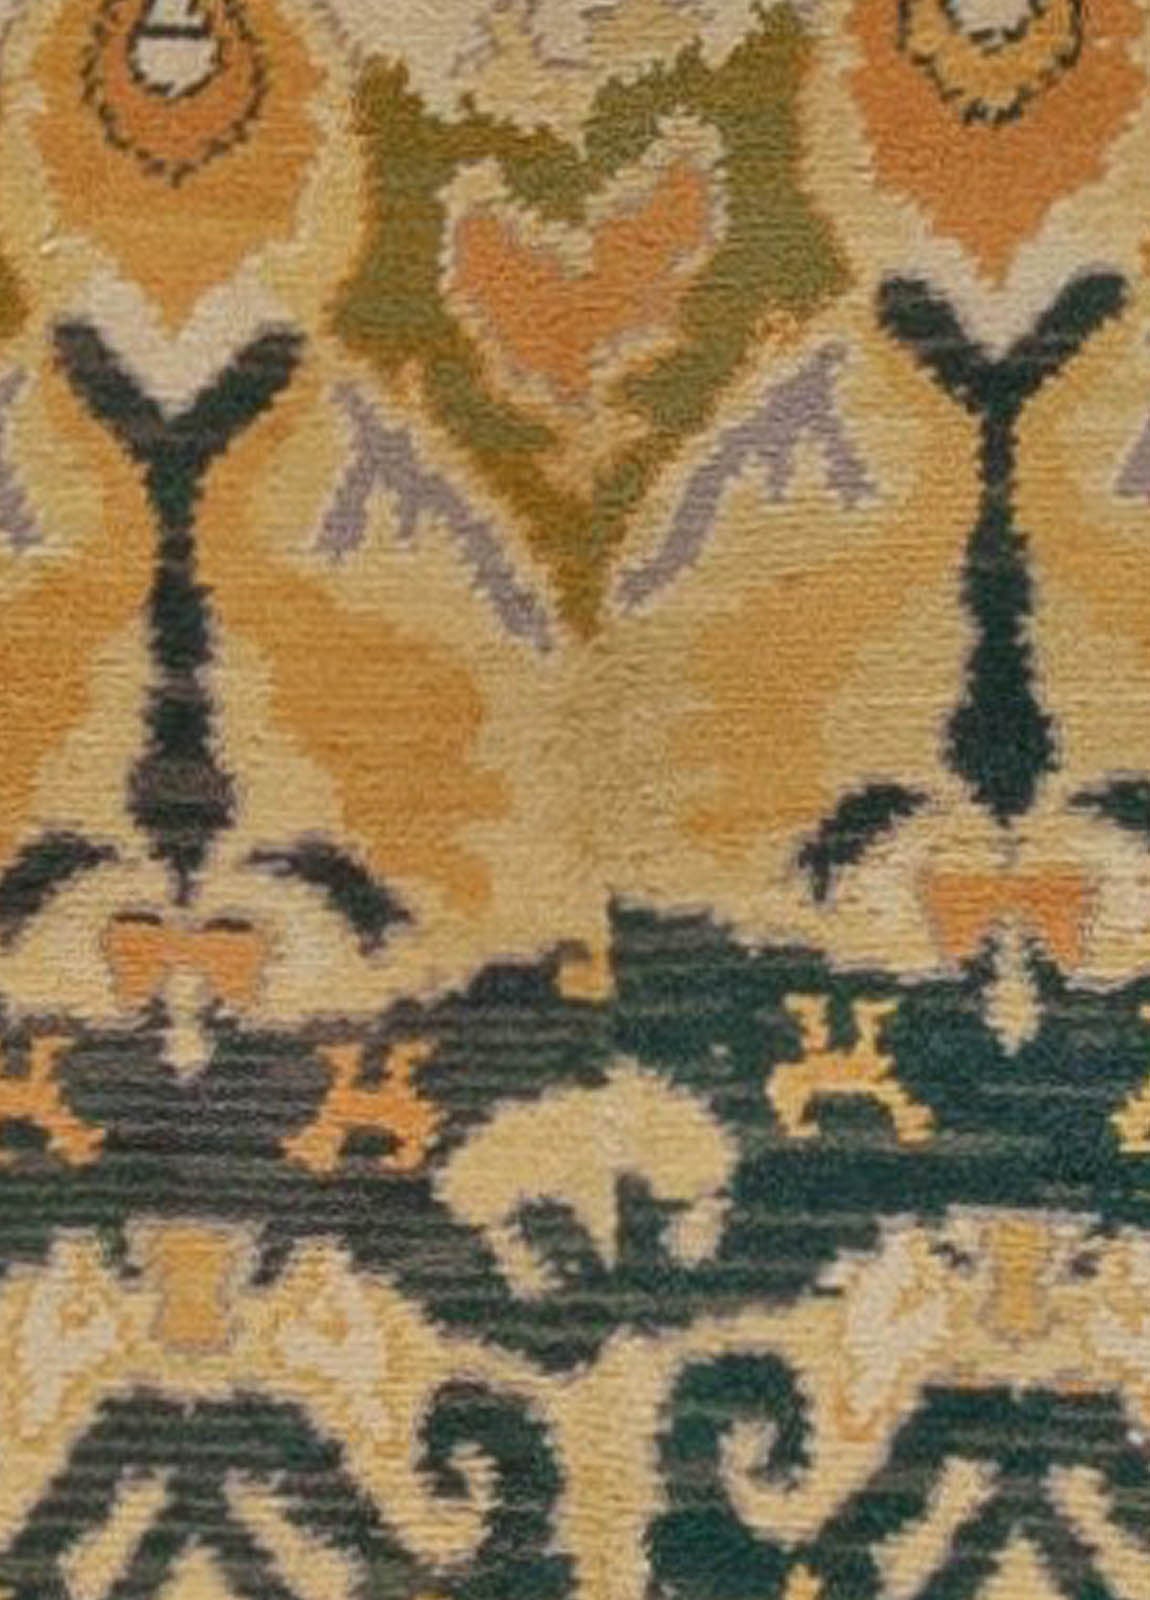 Mid-20th century Spanish handmade wool runner (fragment rug) by Doris Leslie Blau
Size: 4'5